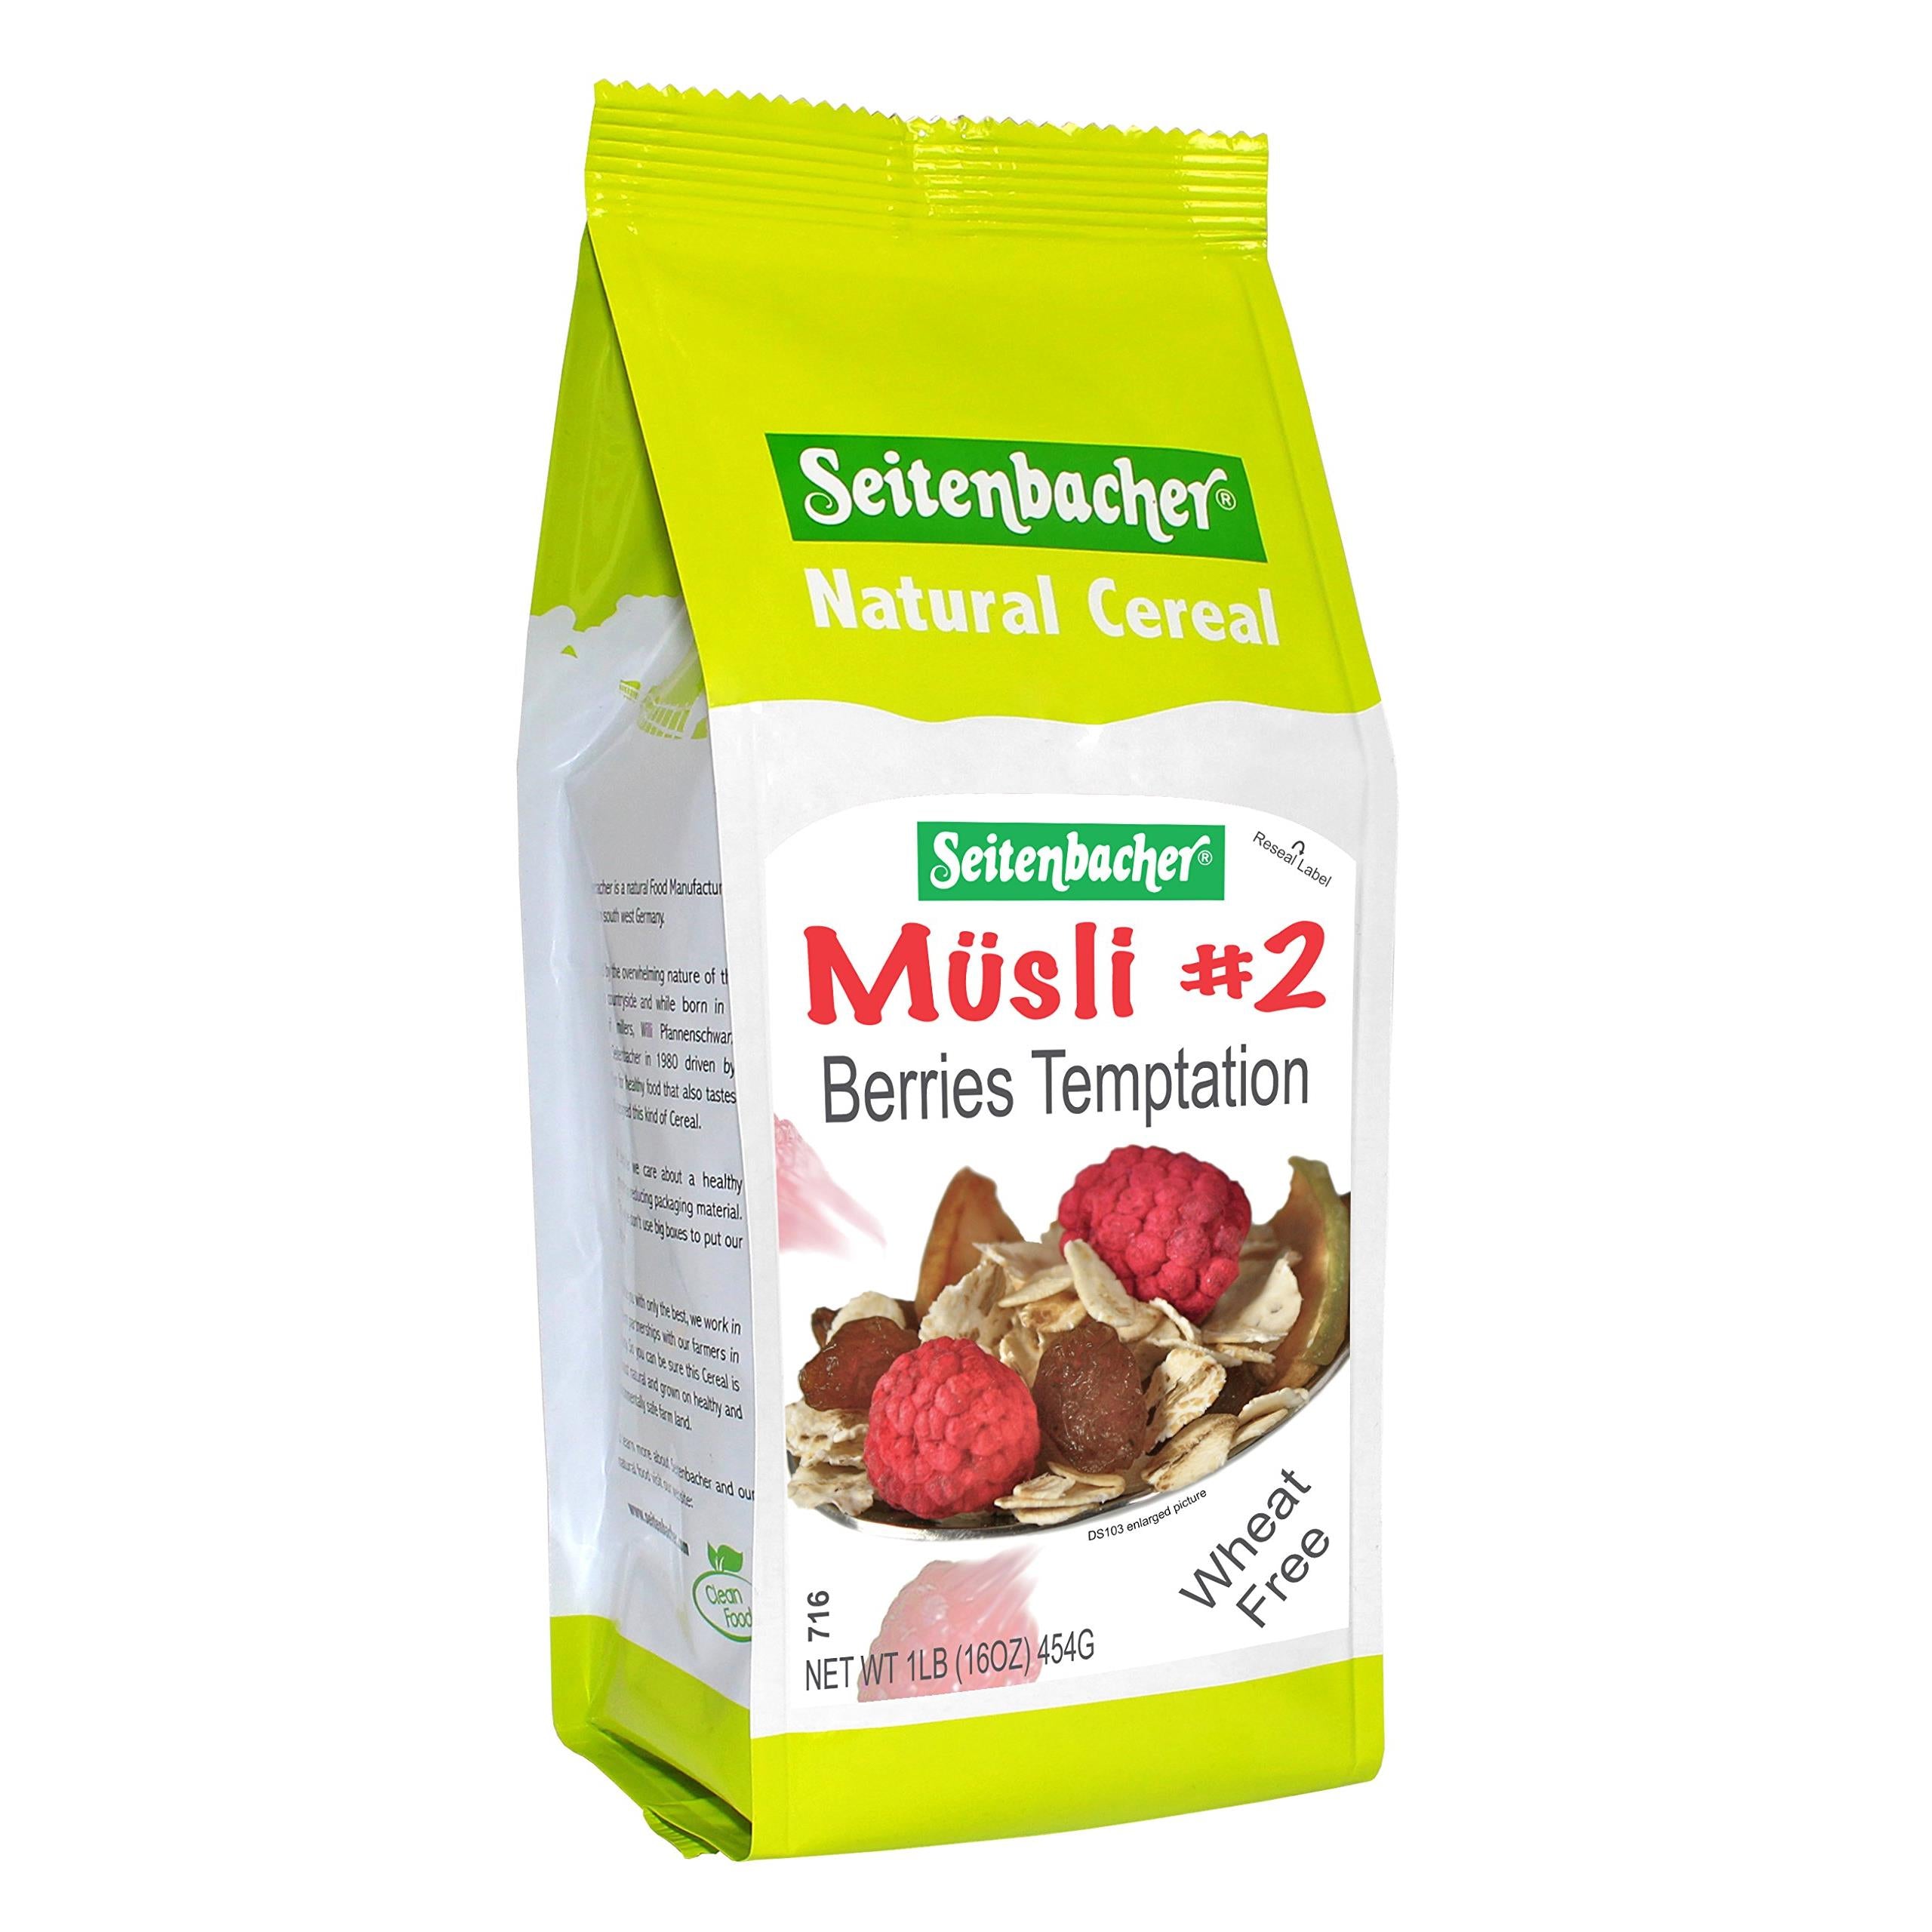 Seitenbacher All Natural Cereal #2 Musli Berries Temptation -- 1 lb - 2 pc